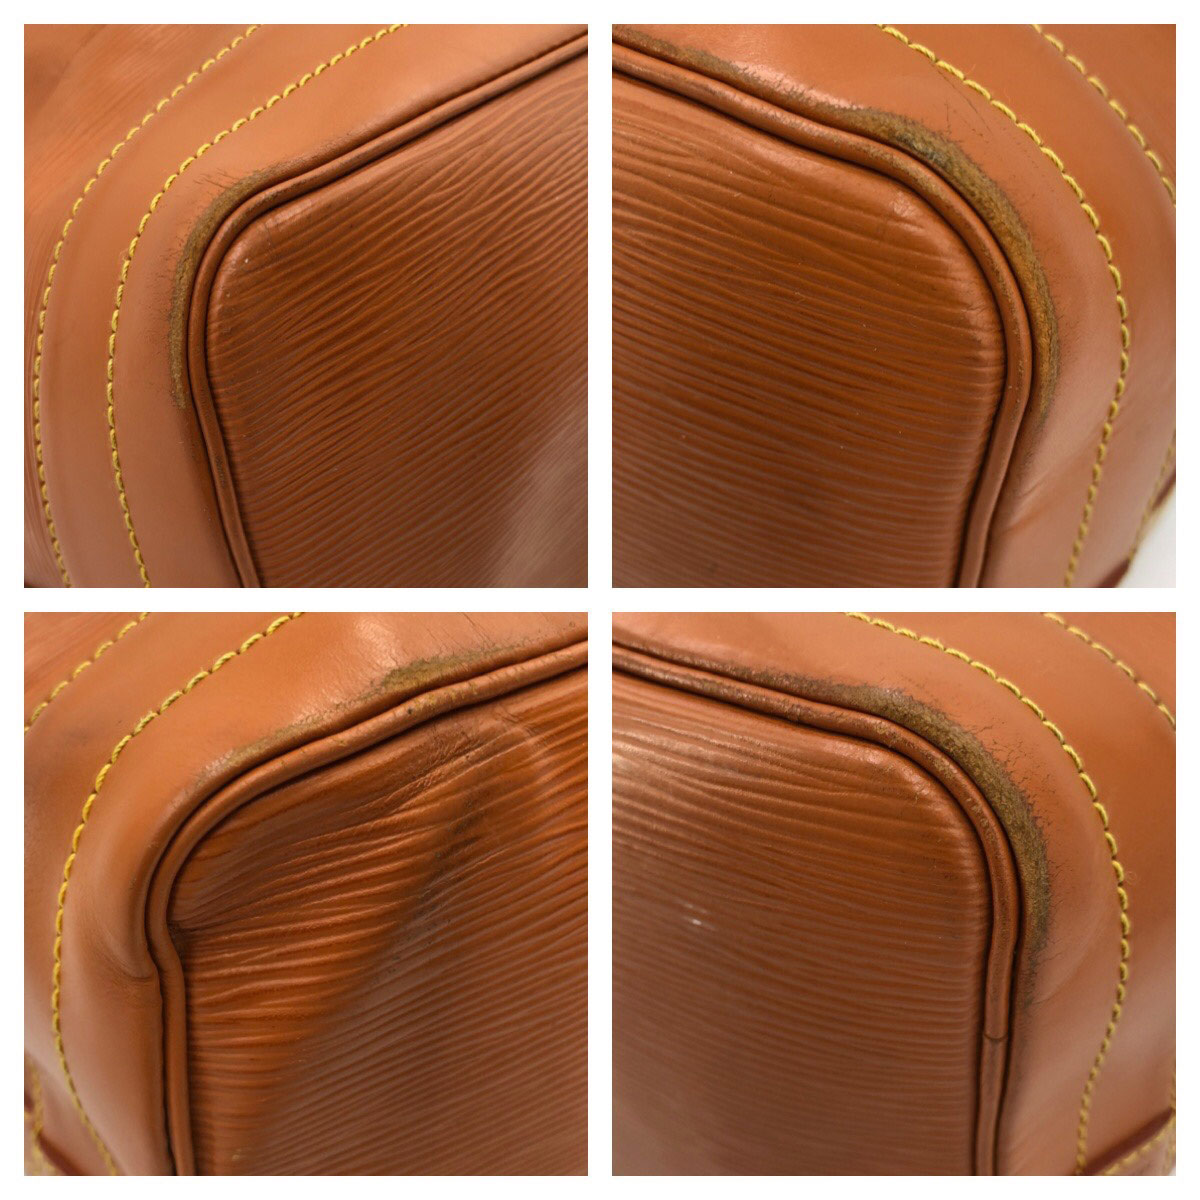 Louis Vuitton 90s vintage mini belt bag in orange epi leather - DOWNTOWN  UPTOWN Genève